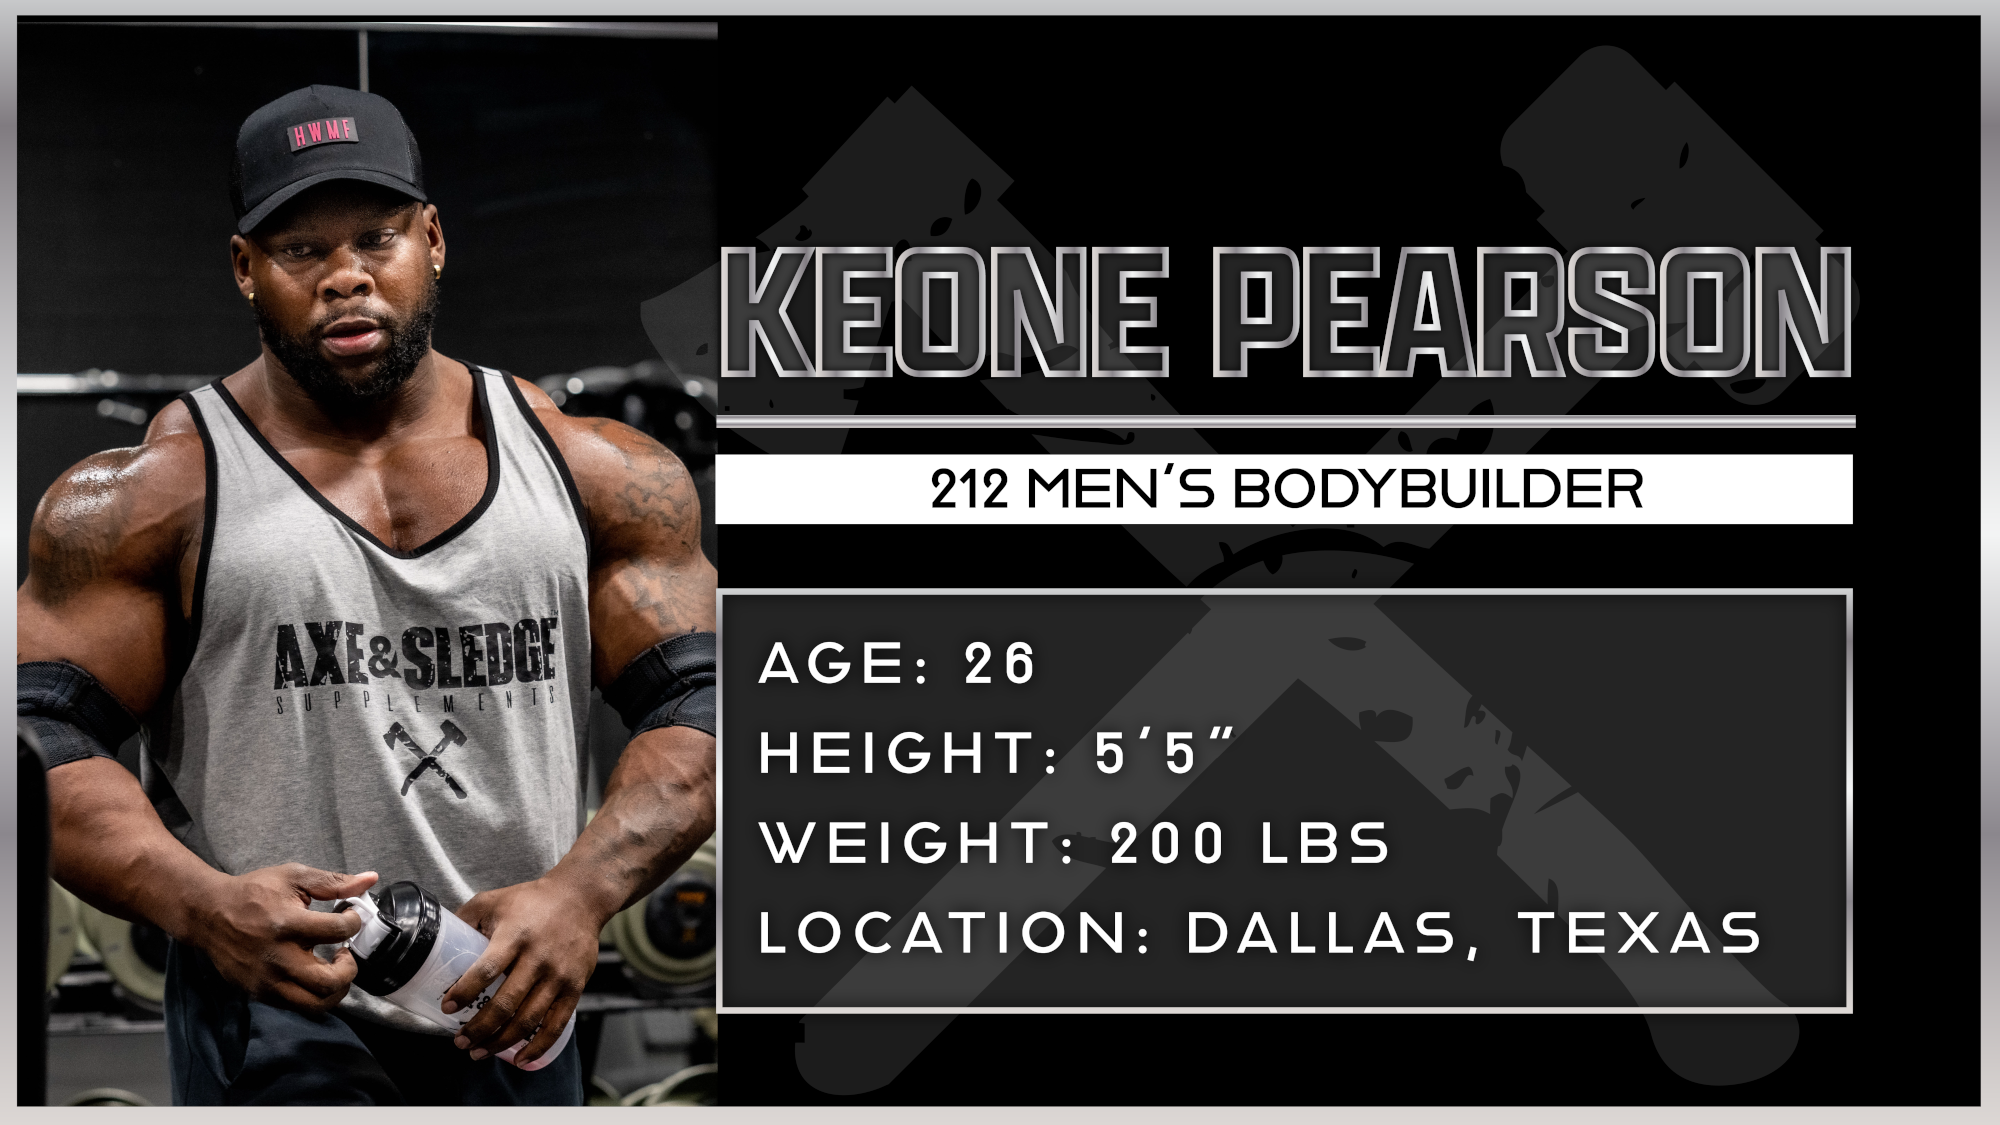 Meet The Team: Keone "Prodigy" Pearson